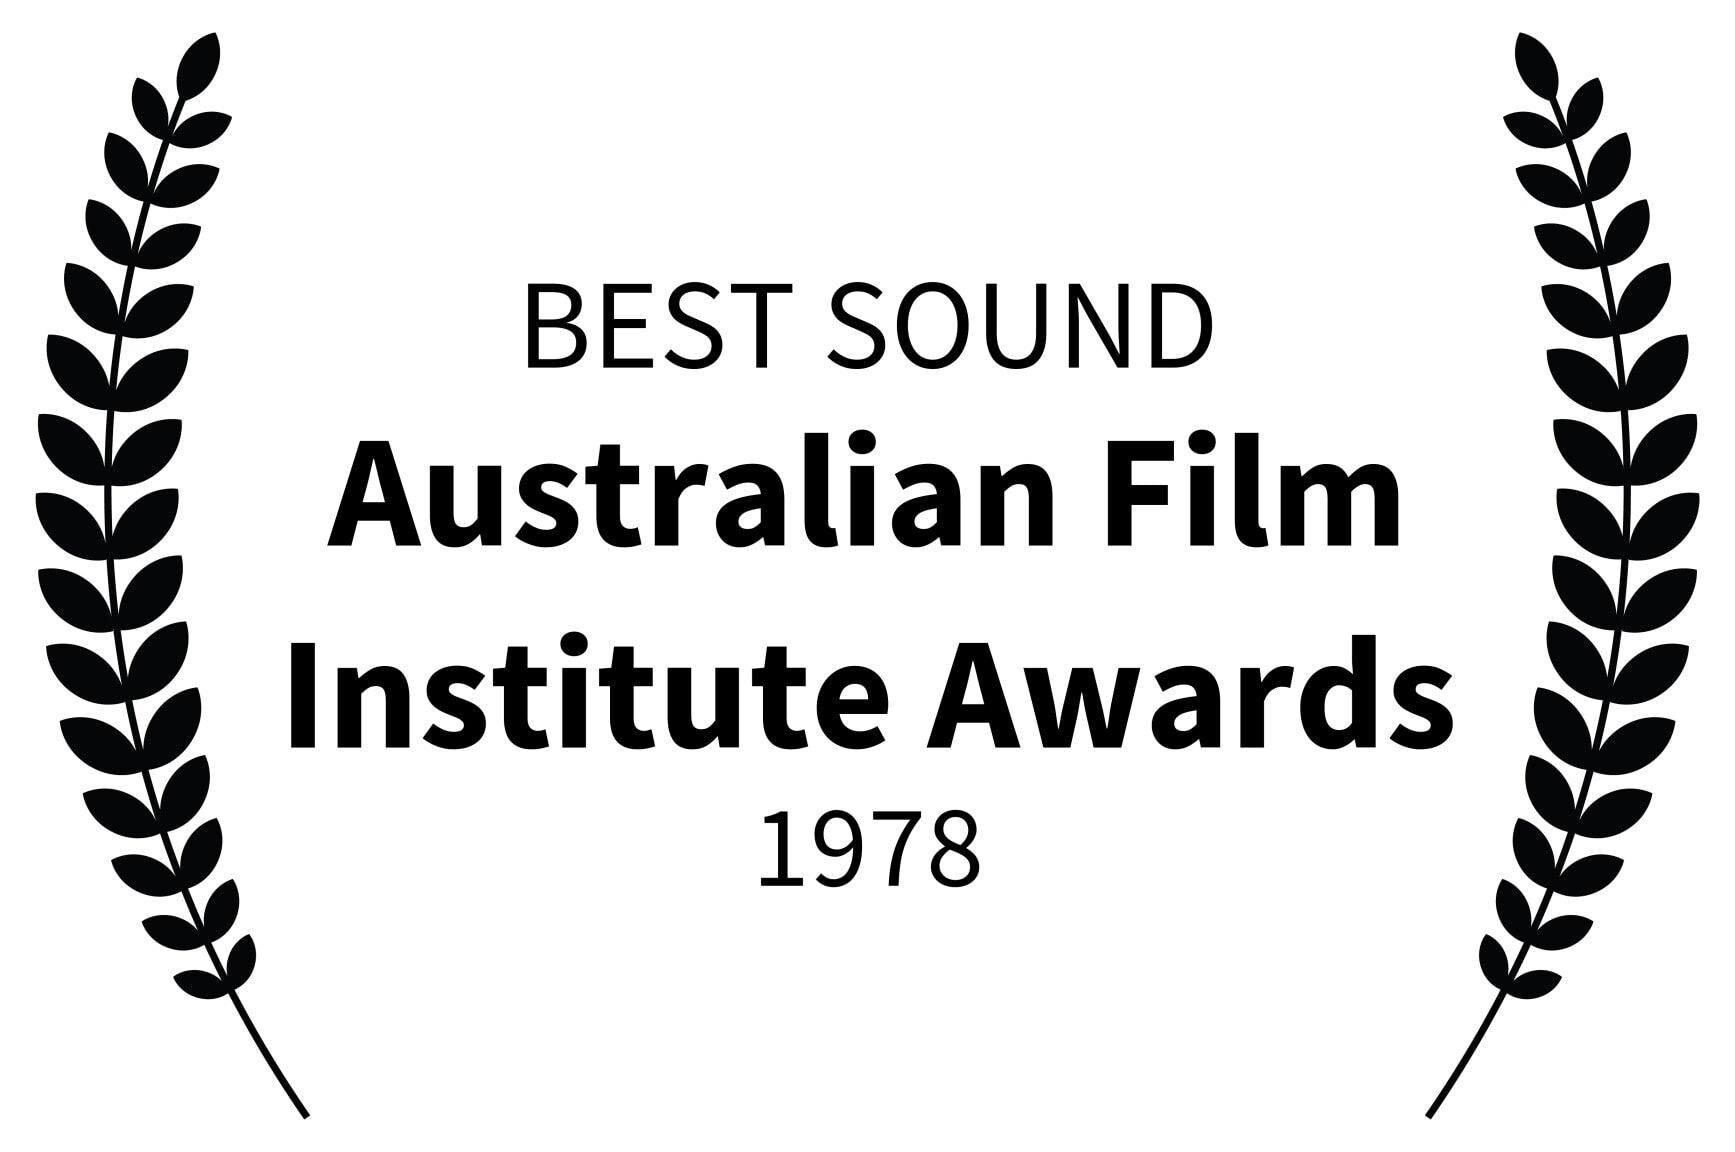 BEST SOUND - Australian Film Institute Awards - 1978